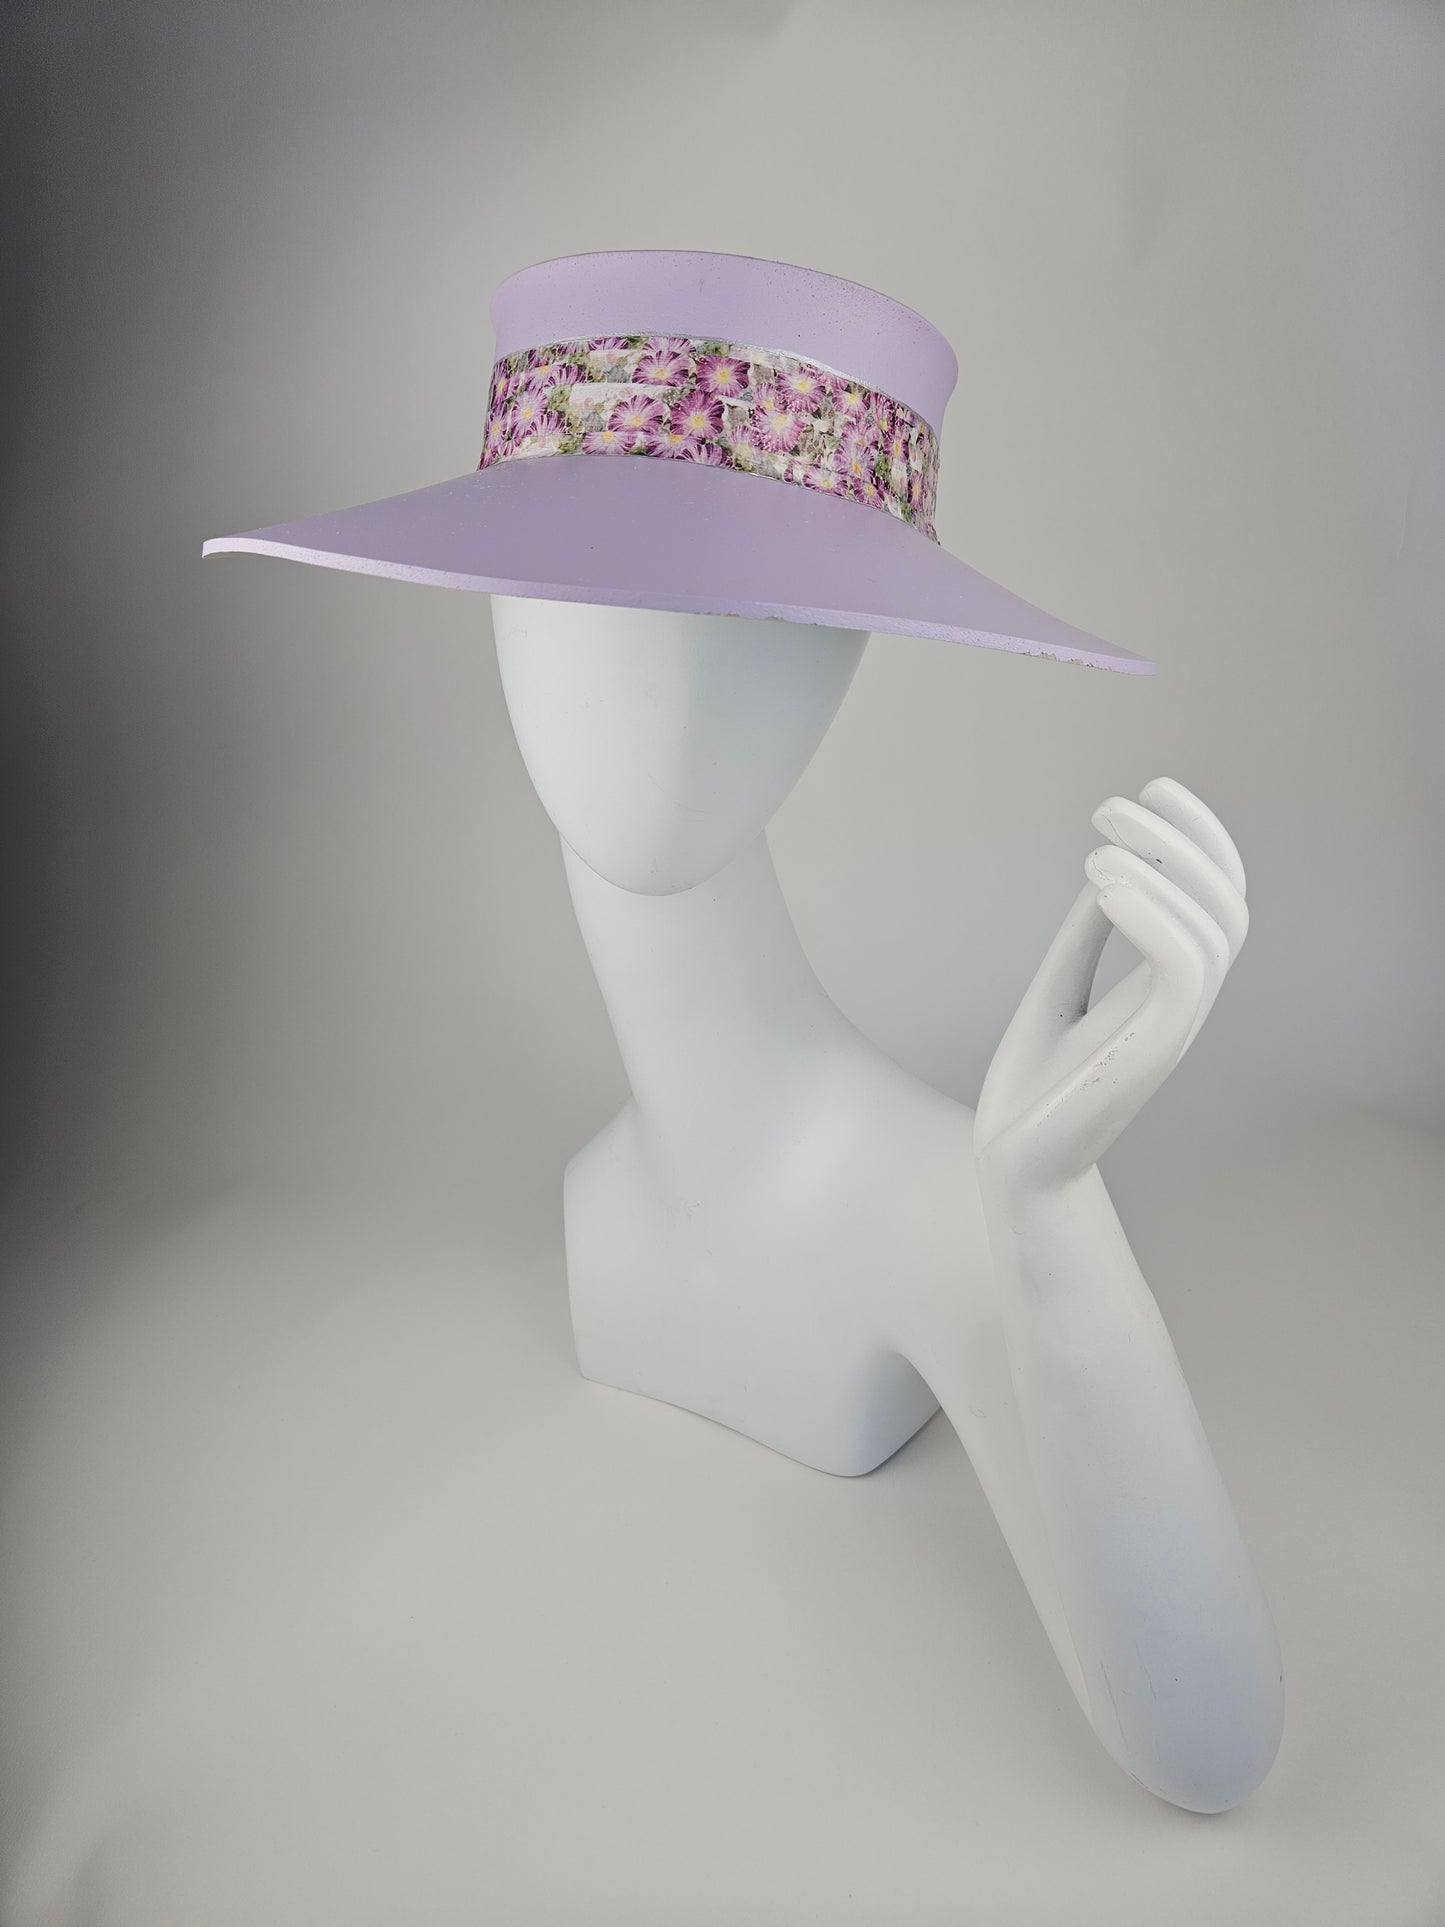 Lilac Purple Audrey Sun Visor Hat with Elegant Purple Floral Band: Tea, Walks, Brunch, Asian, Golf, Summer, Church, No Headache, Pool, Beach